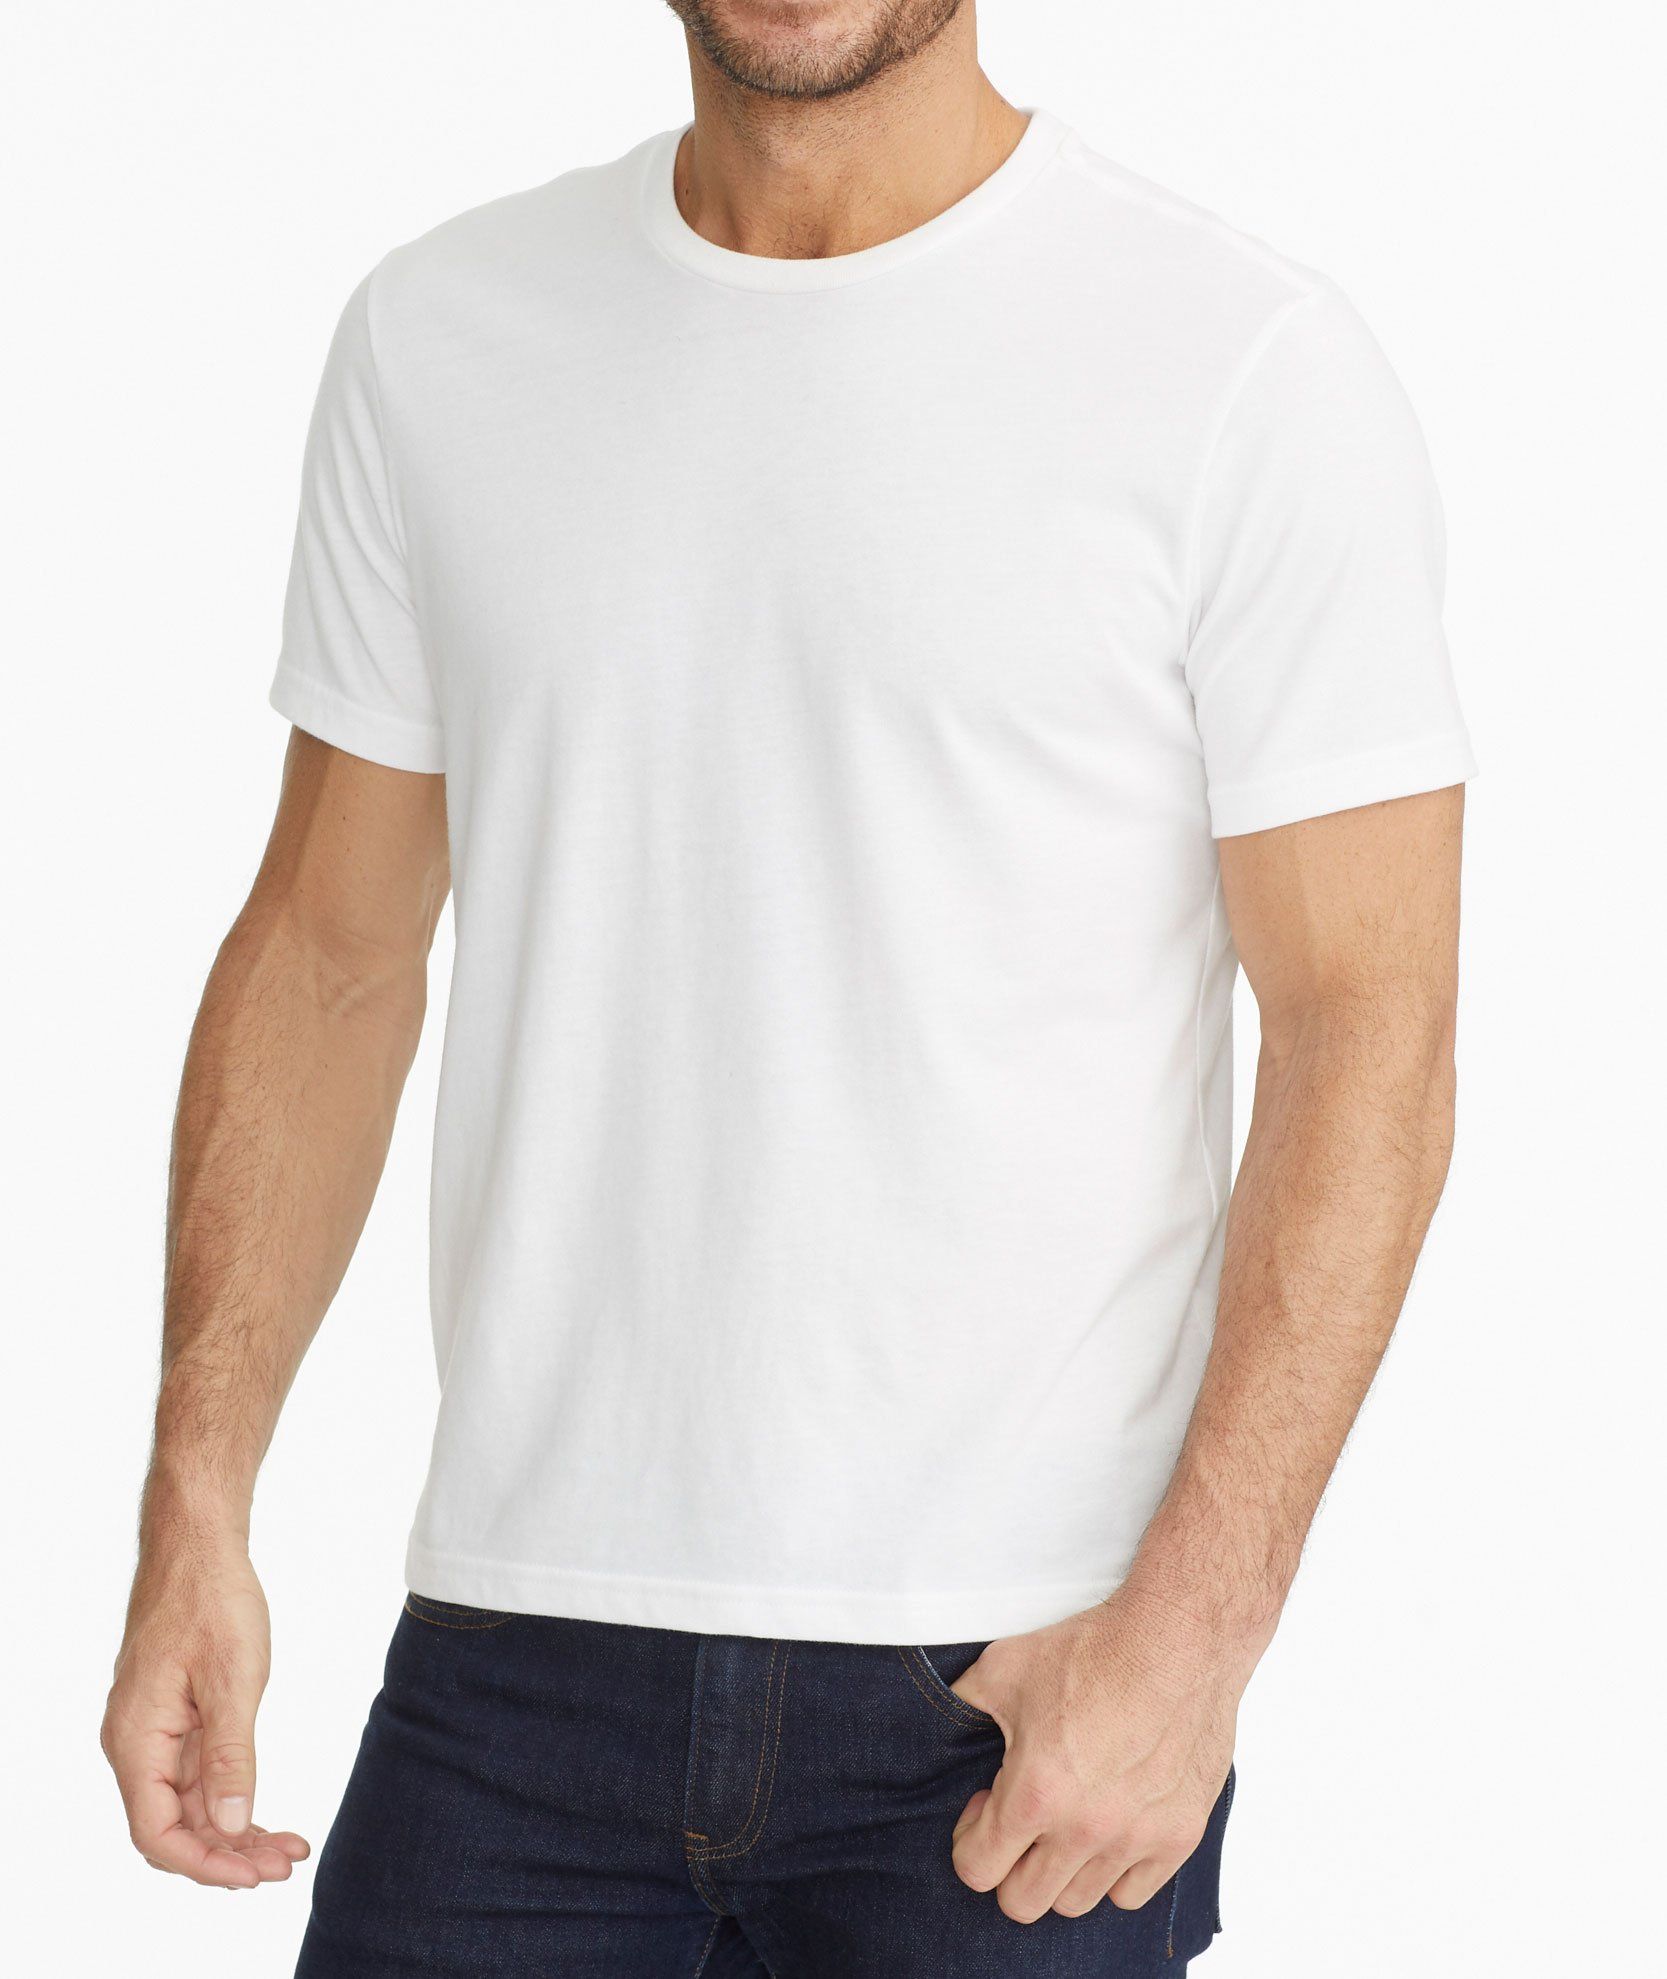 15 Best White T-Shirts for Men 2022 